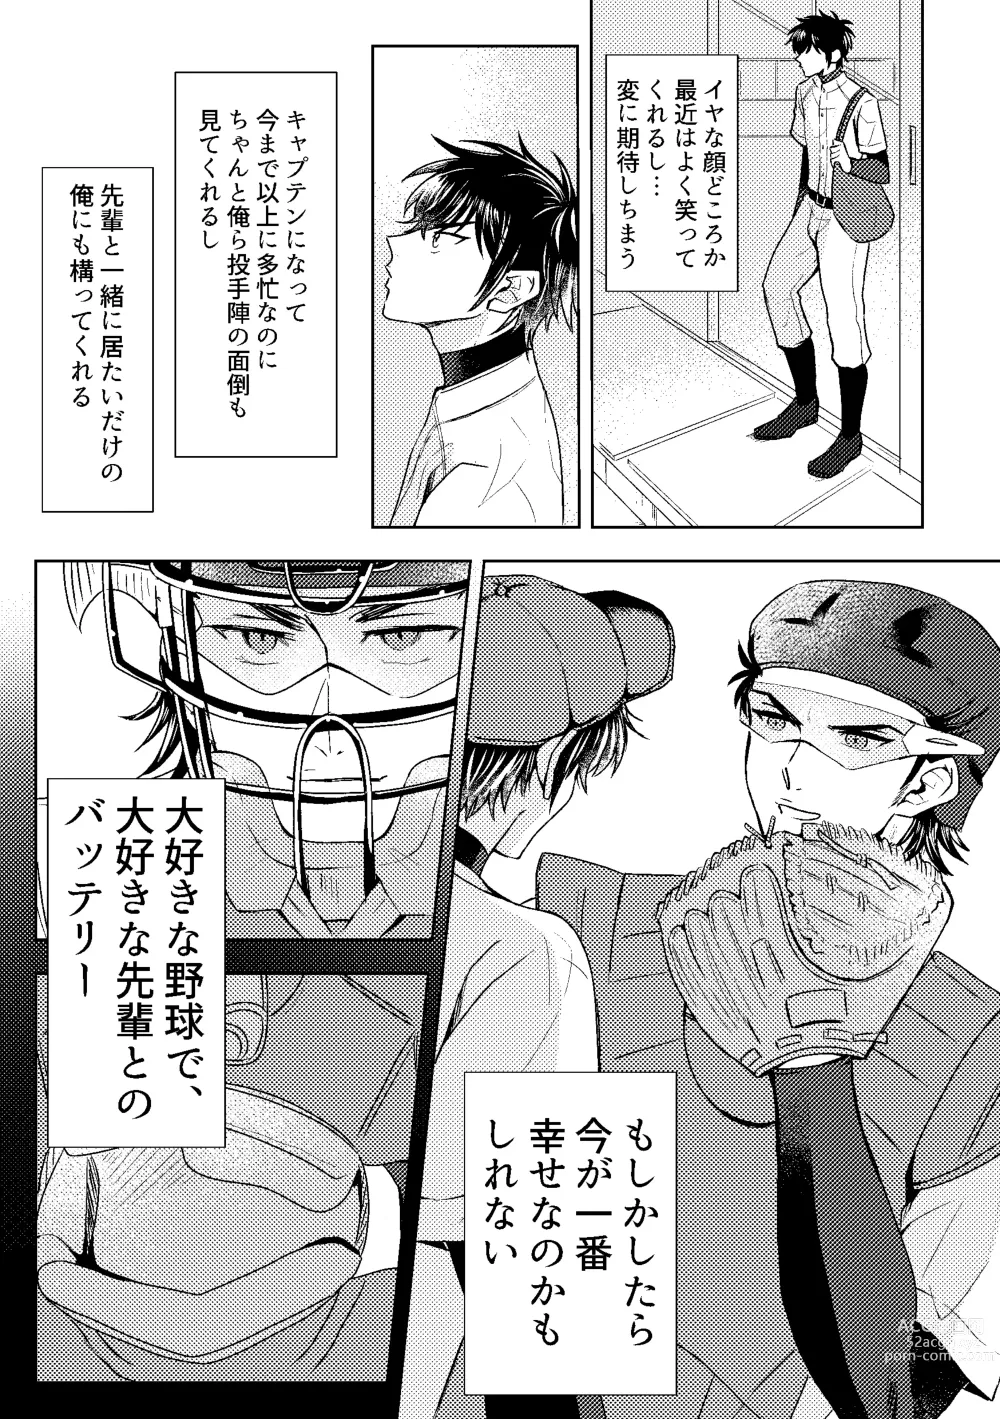 Page 17 of doujinshi Hatsukoi Sparkle